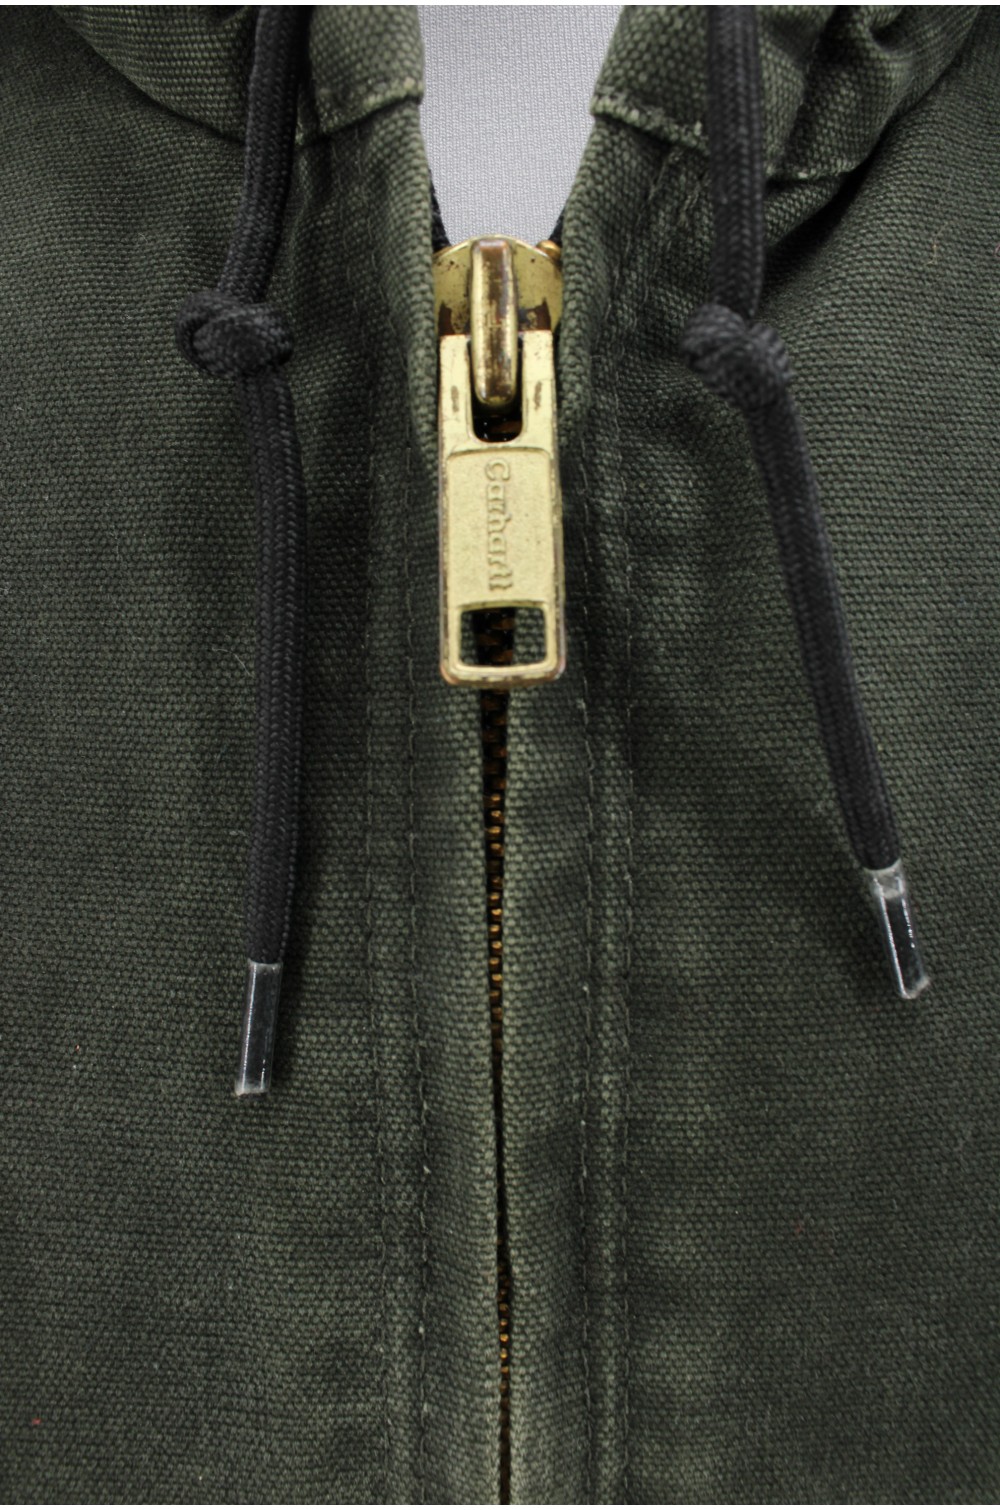 Blouson Carhartt (bomber jacket) / Vêtement d'occasion vintage friperie